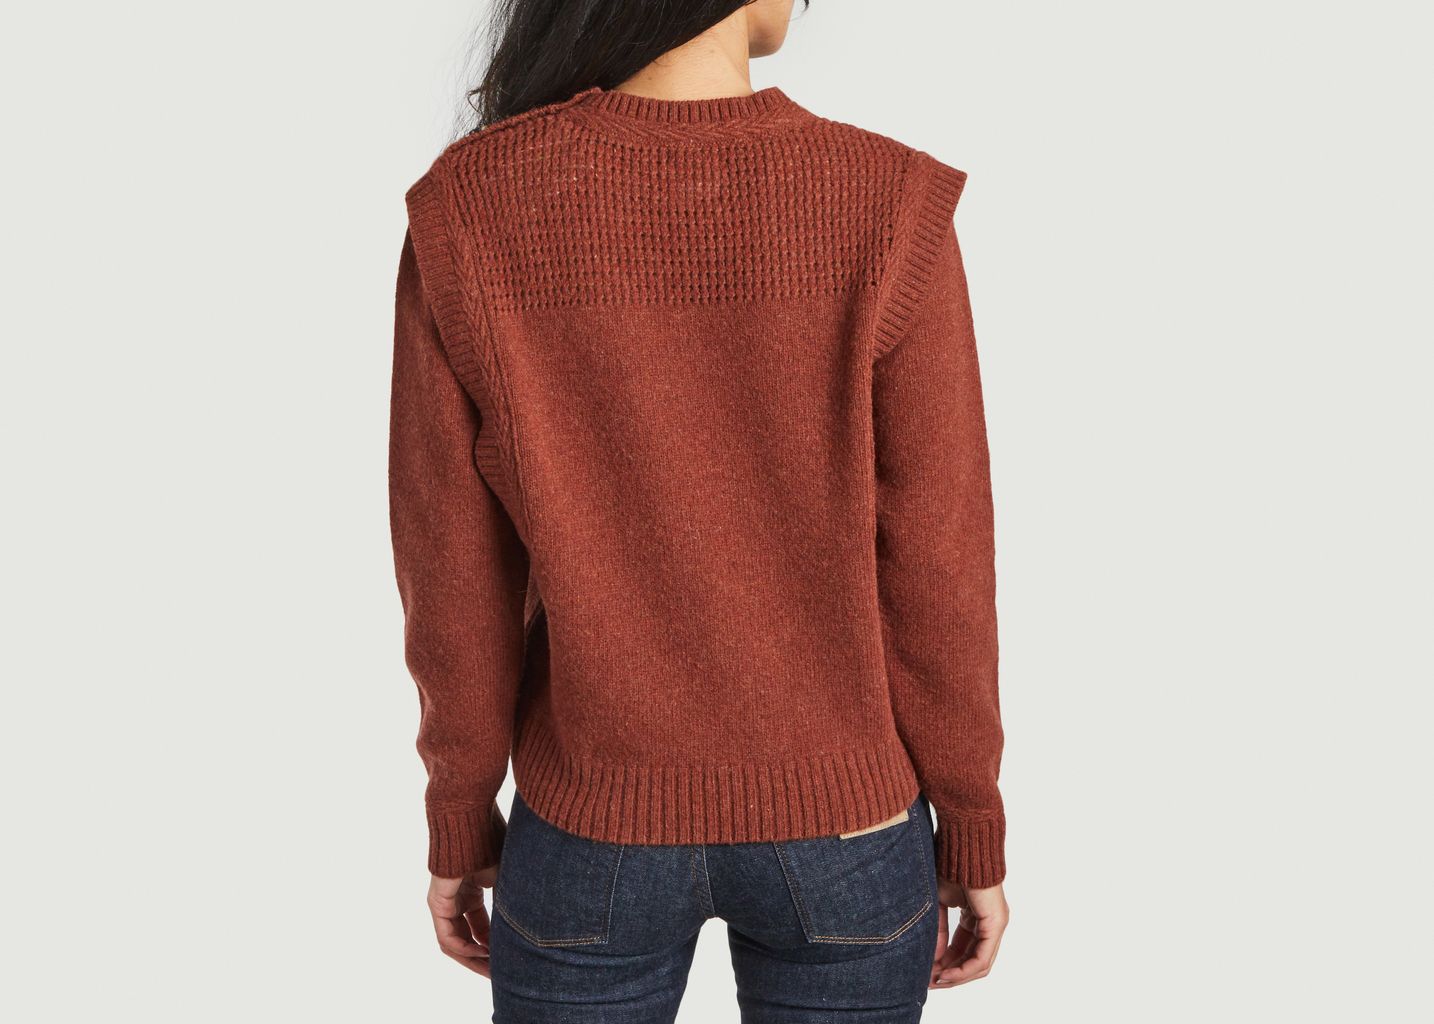 Olympia Sweater - La mécanique du pull